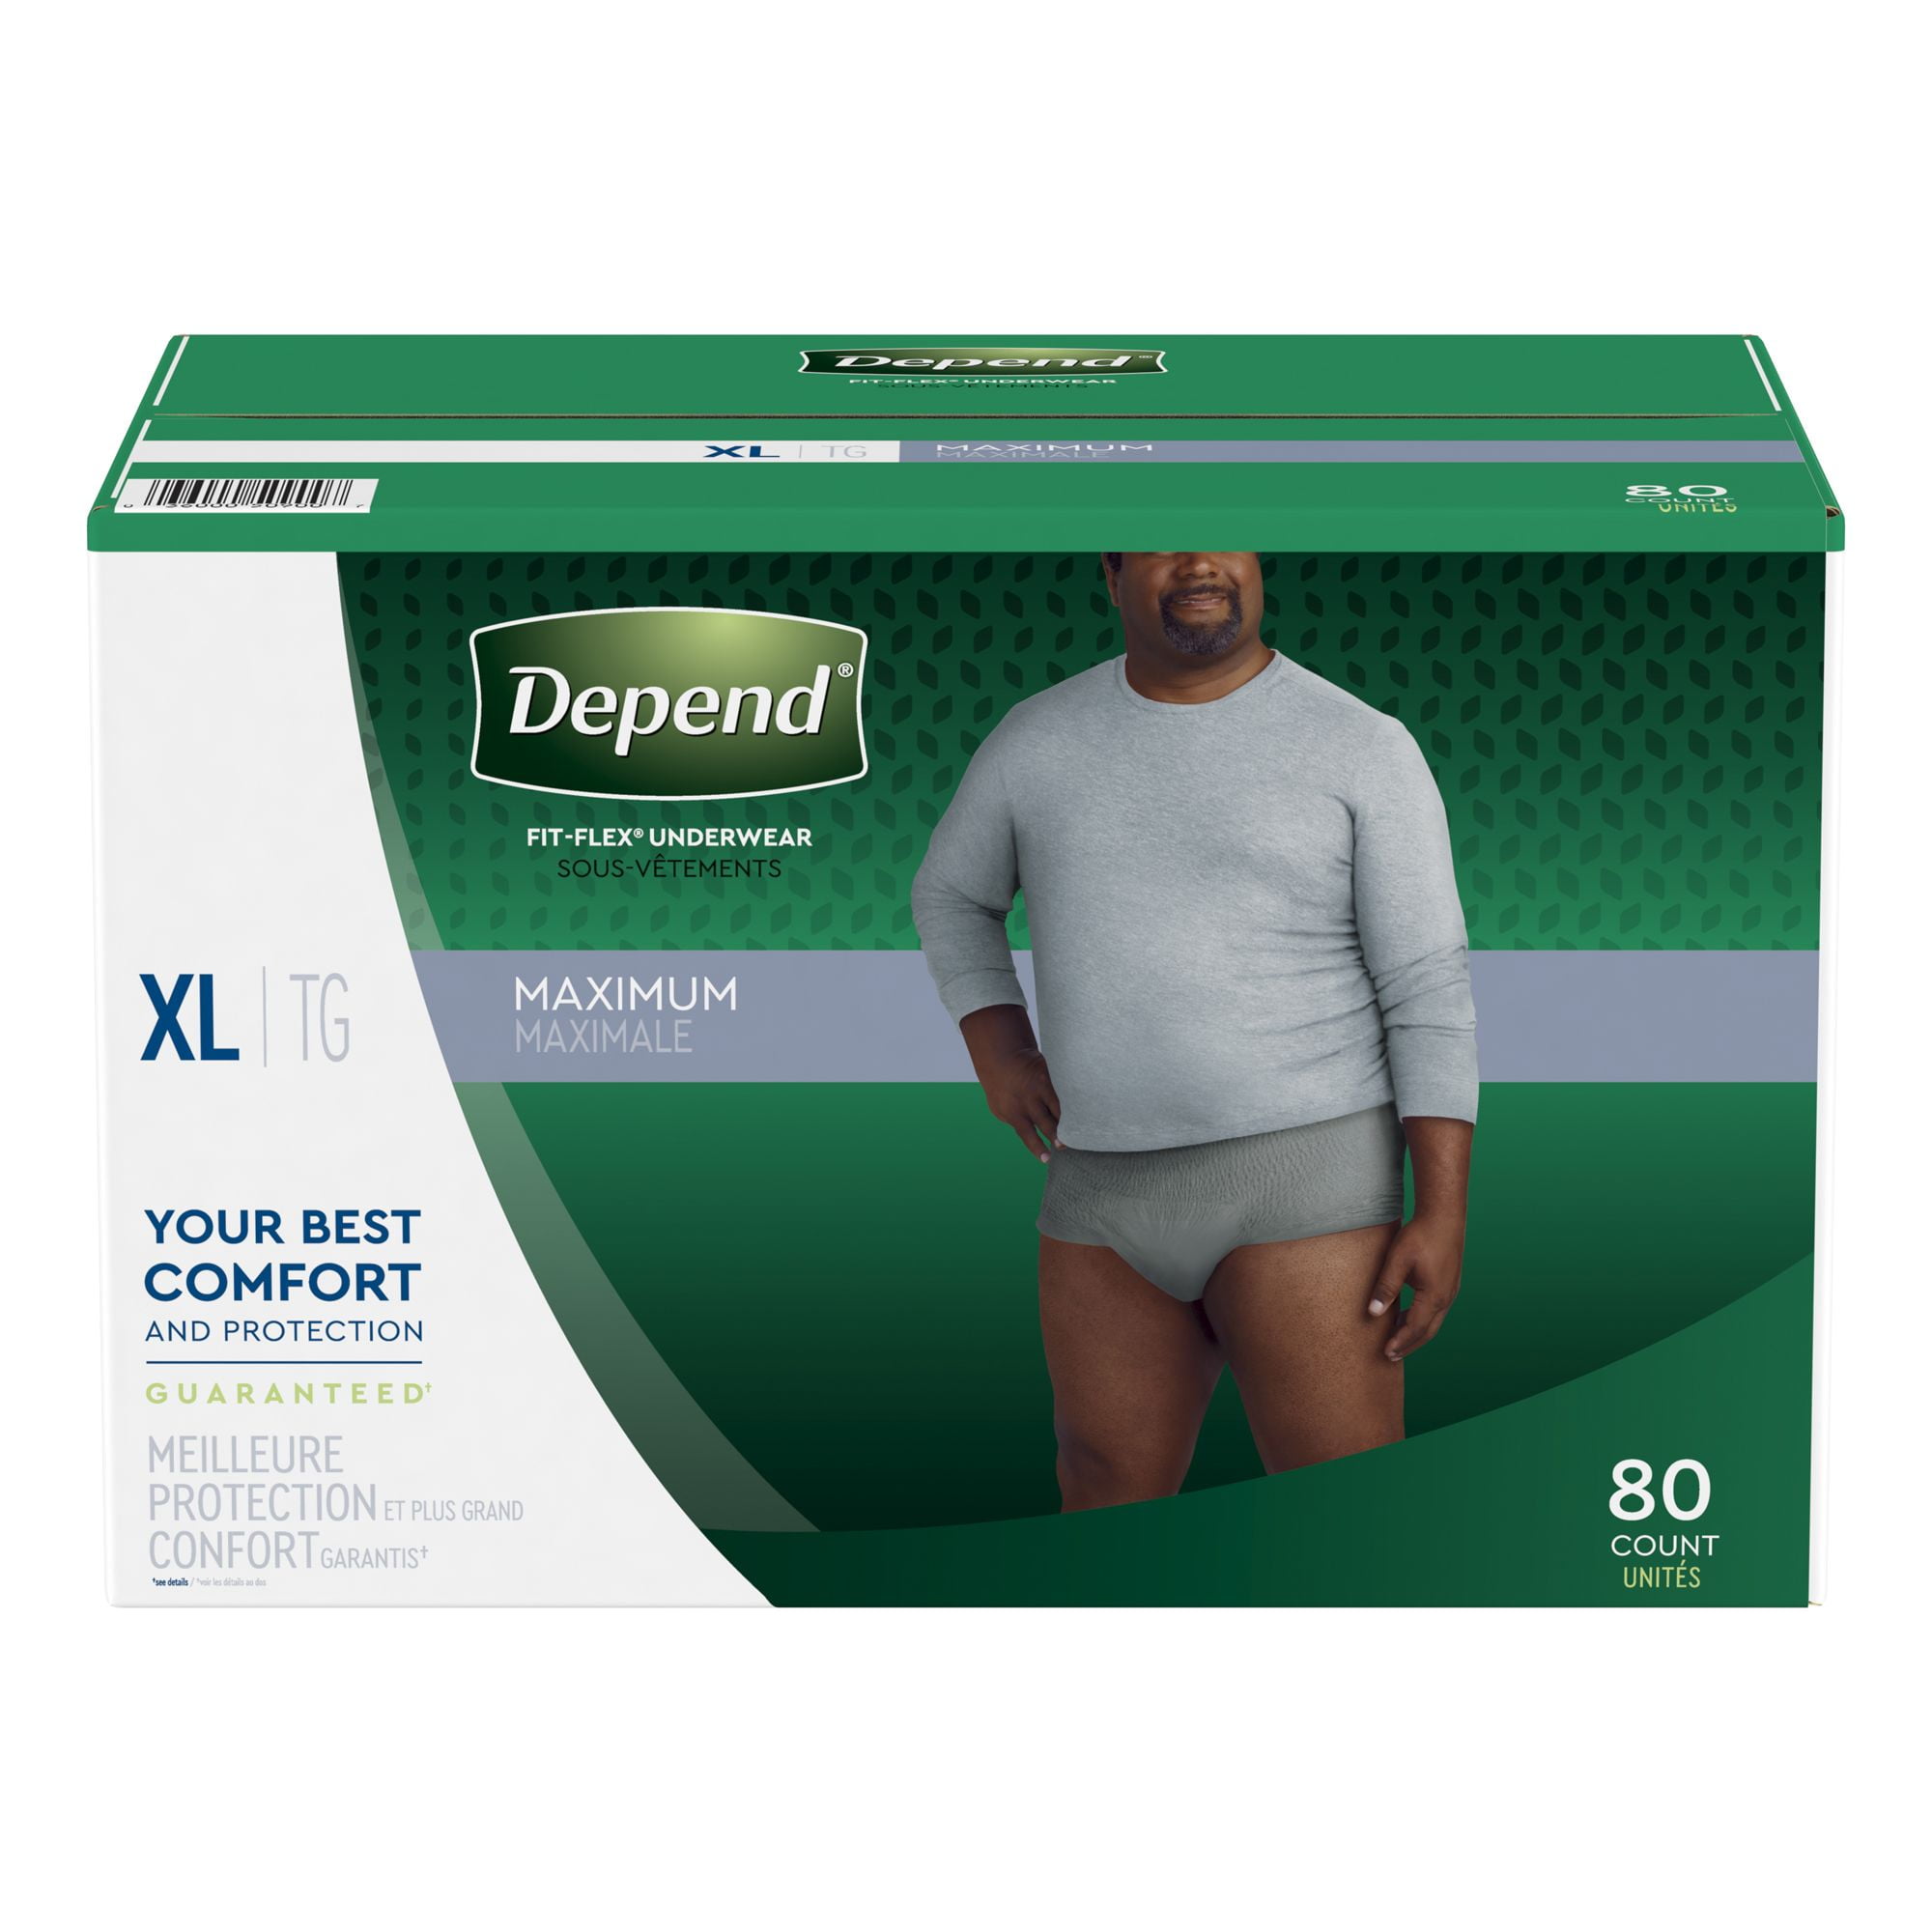 Depends for Men disposable underwear for light bladder leak protection  FIT-FLEX Maximum absorbncy –